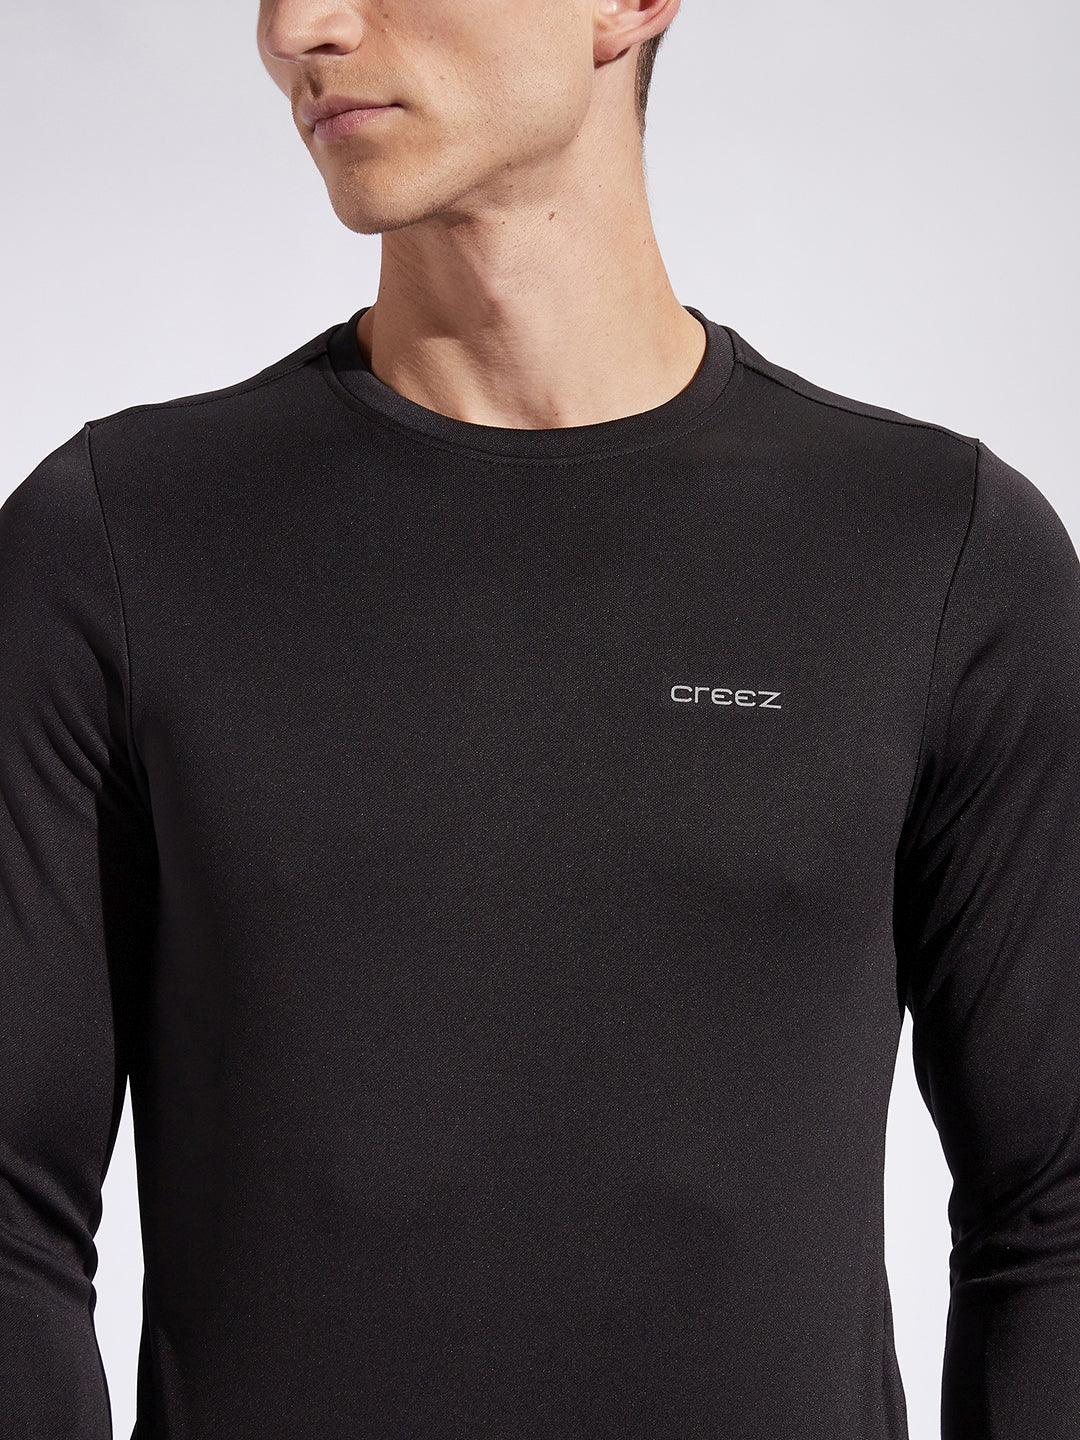 Creez Full Sleeves T-shirts-001